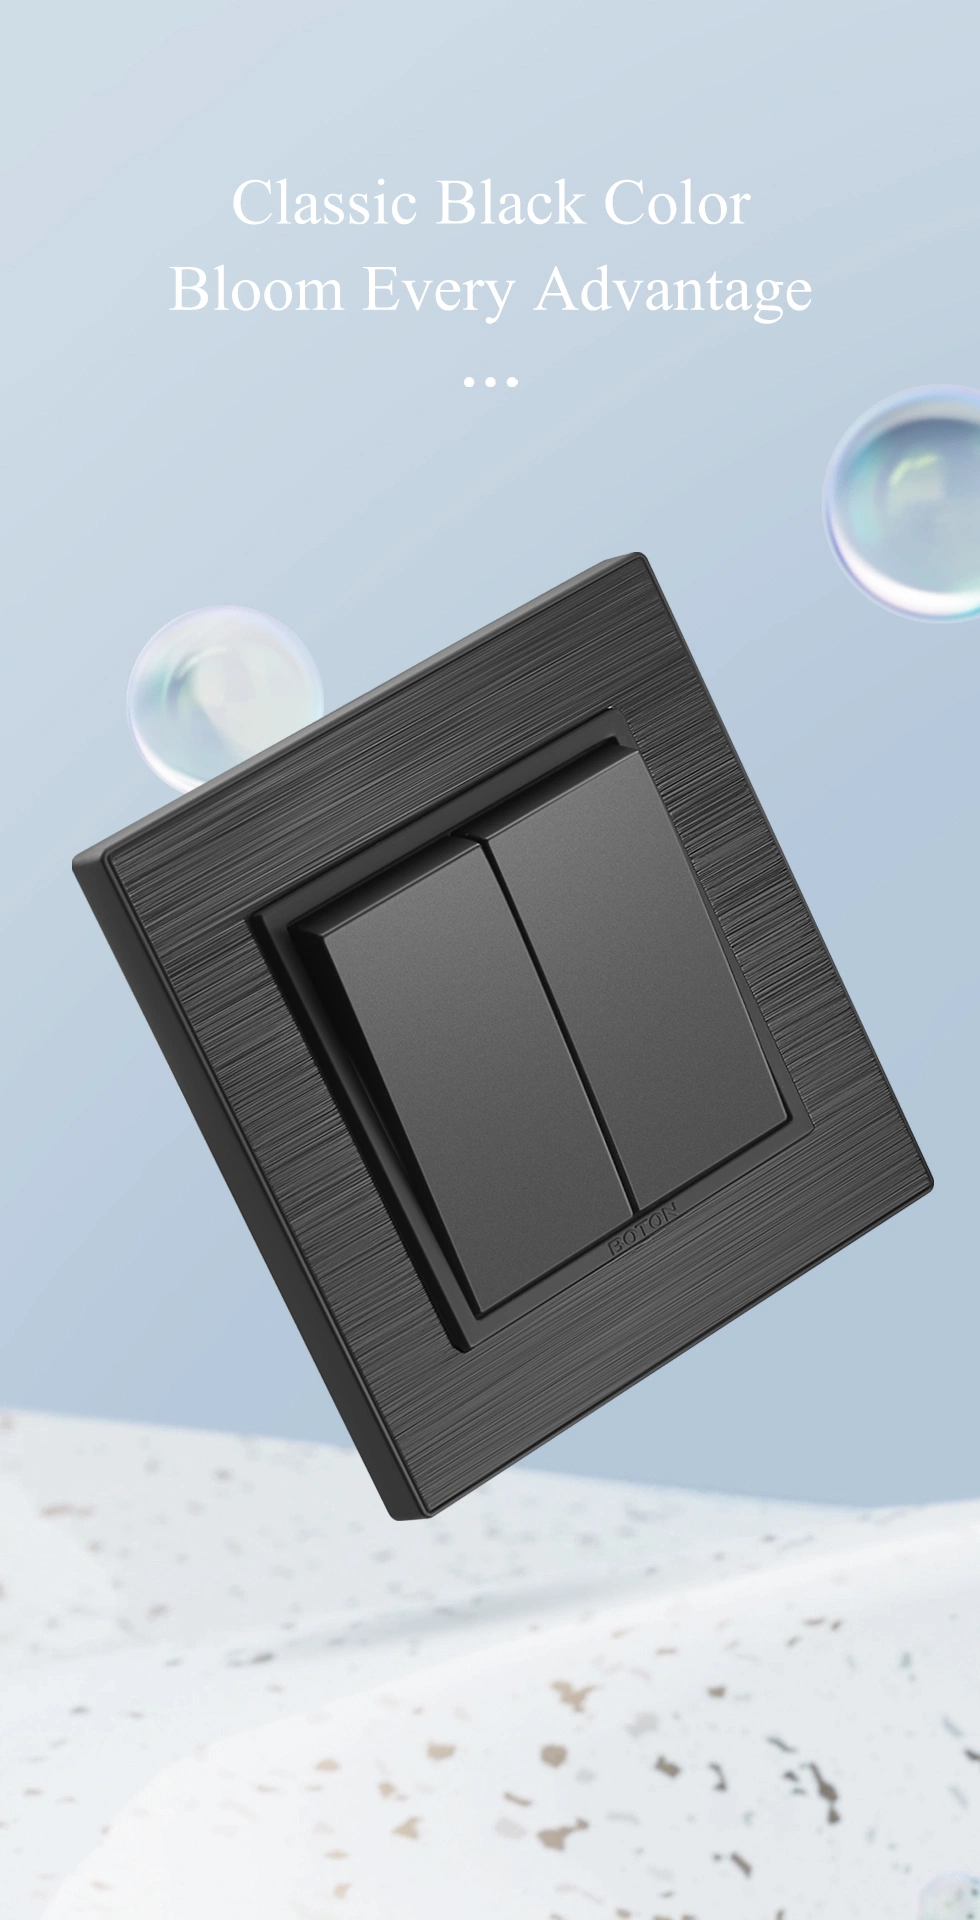 Apartment Indoor Flush Type Decorative Doorbell Switch